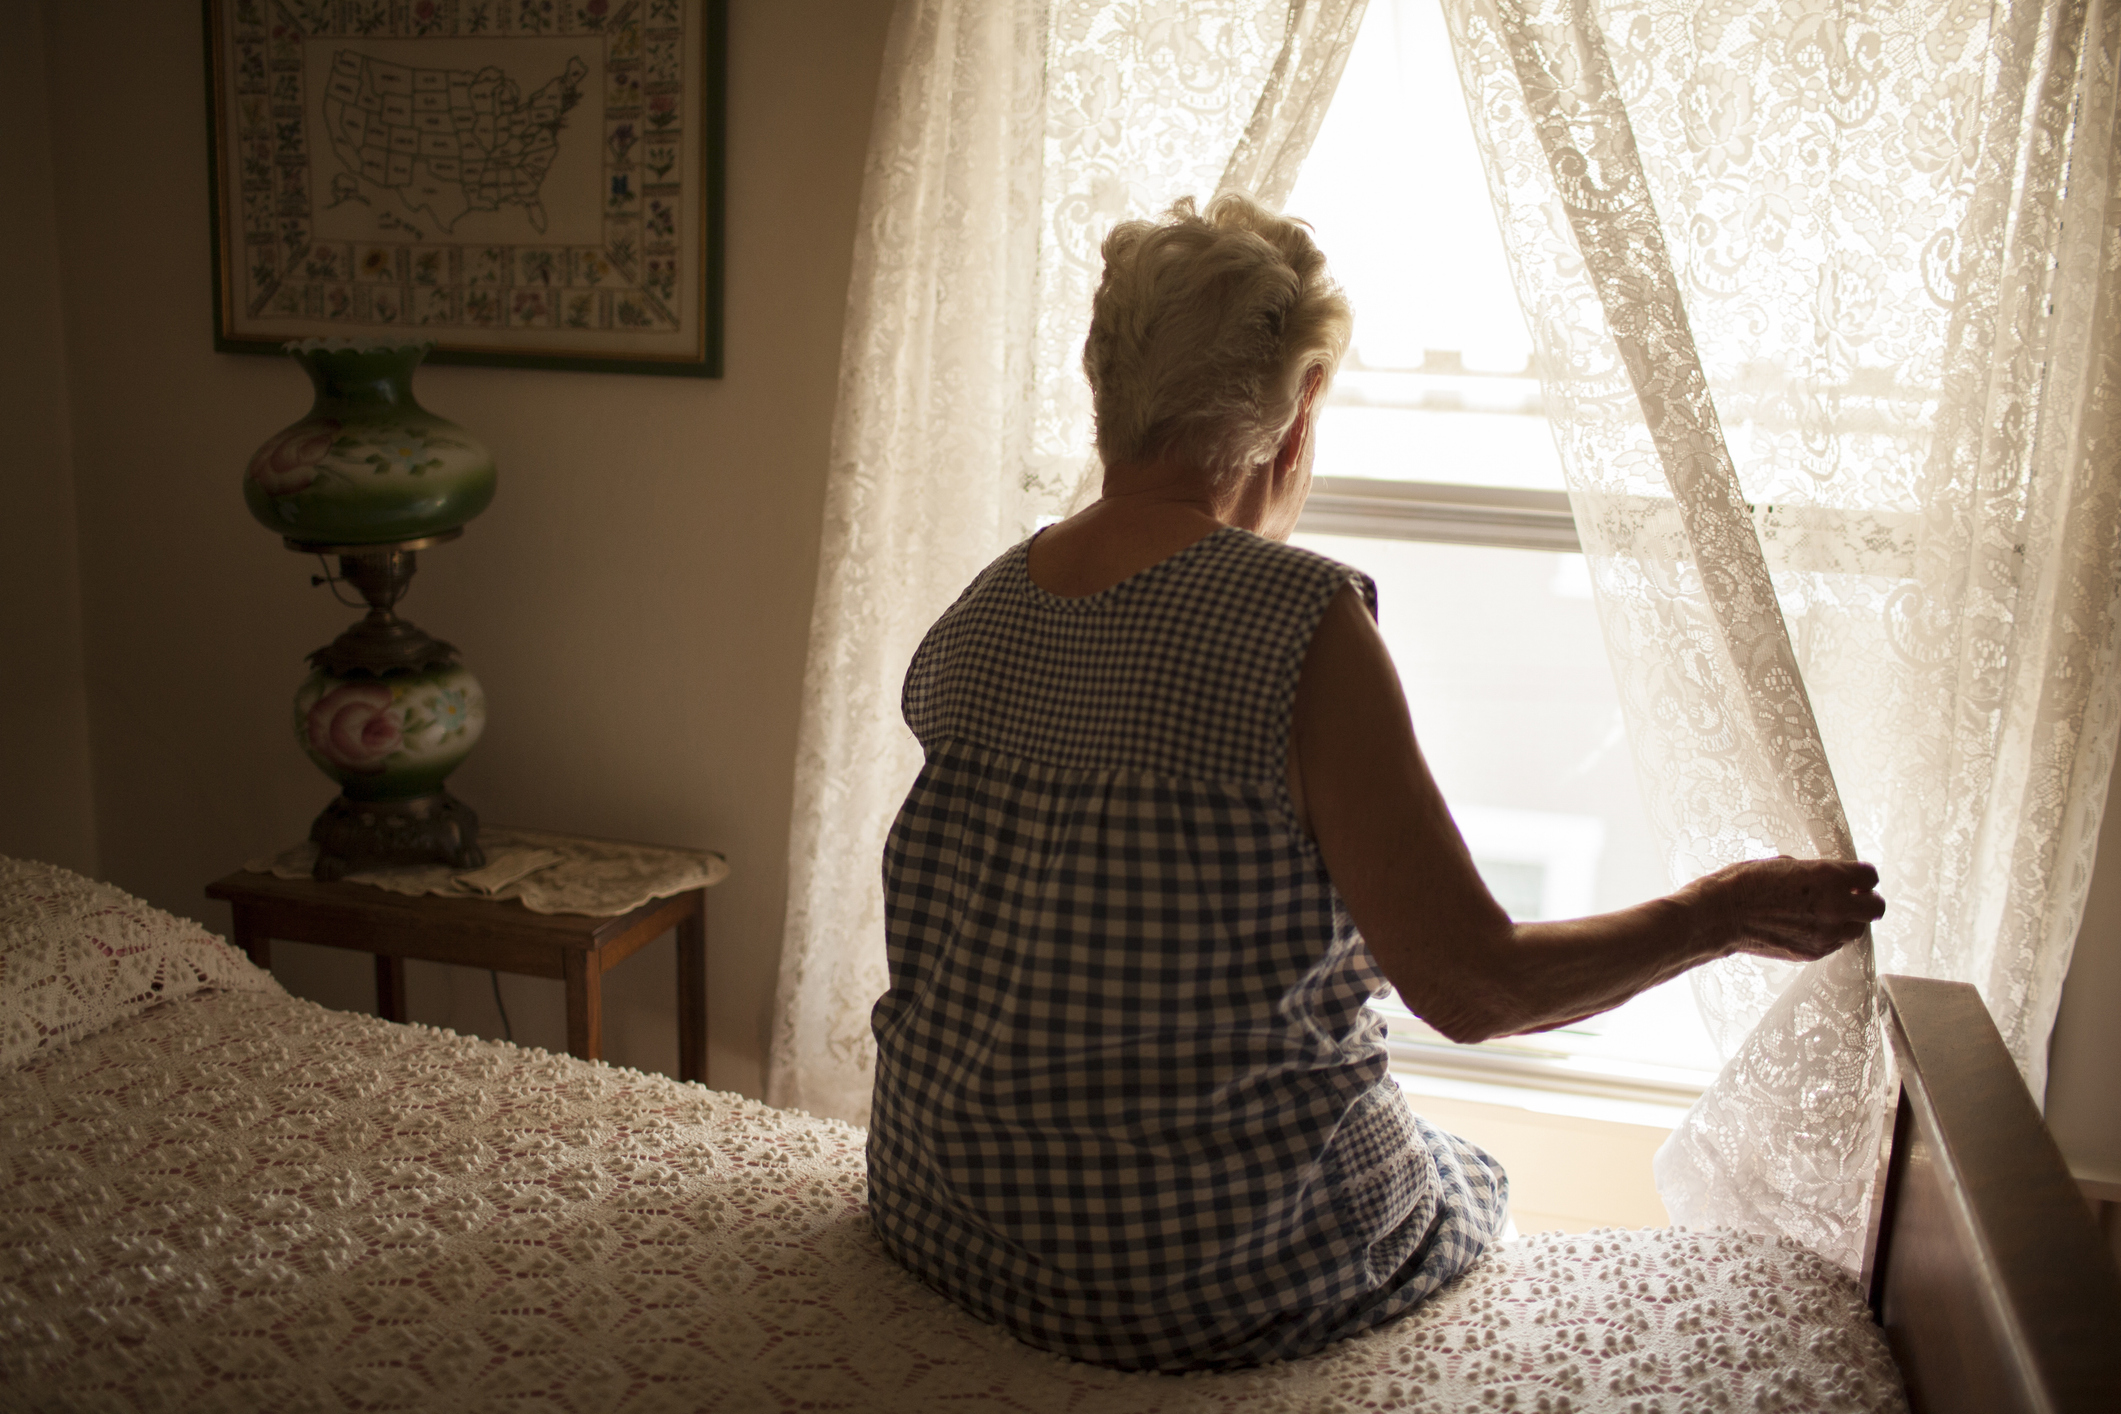 Pensive older woman looking out bedroom window